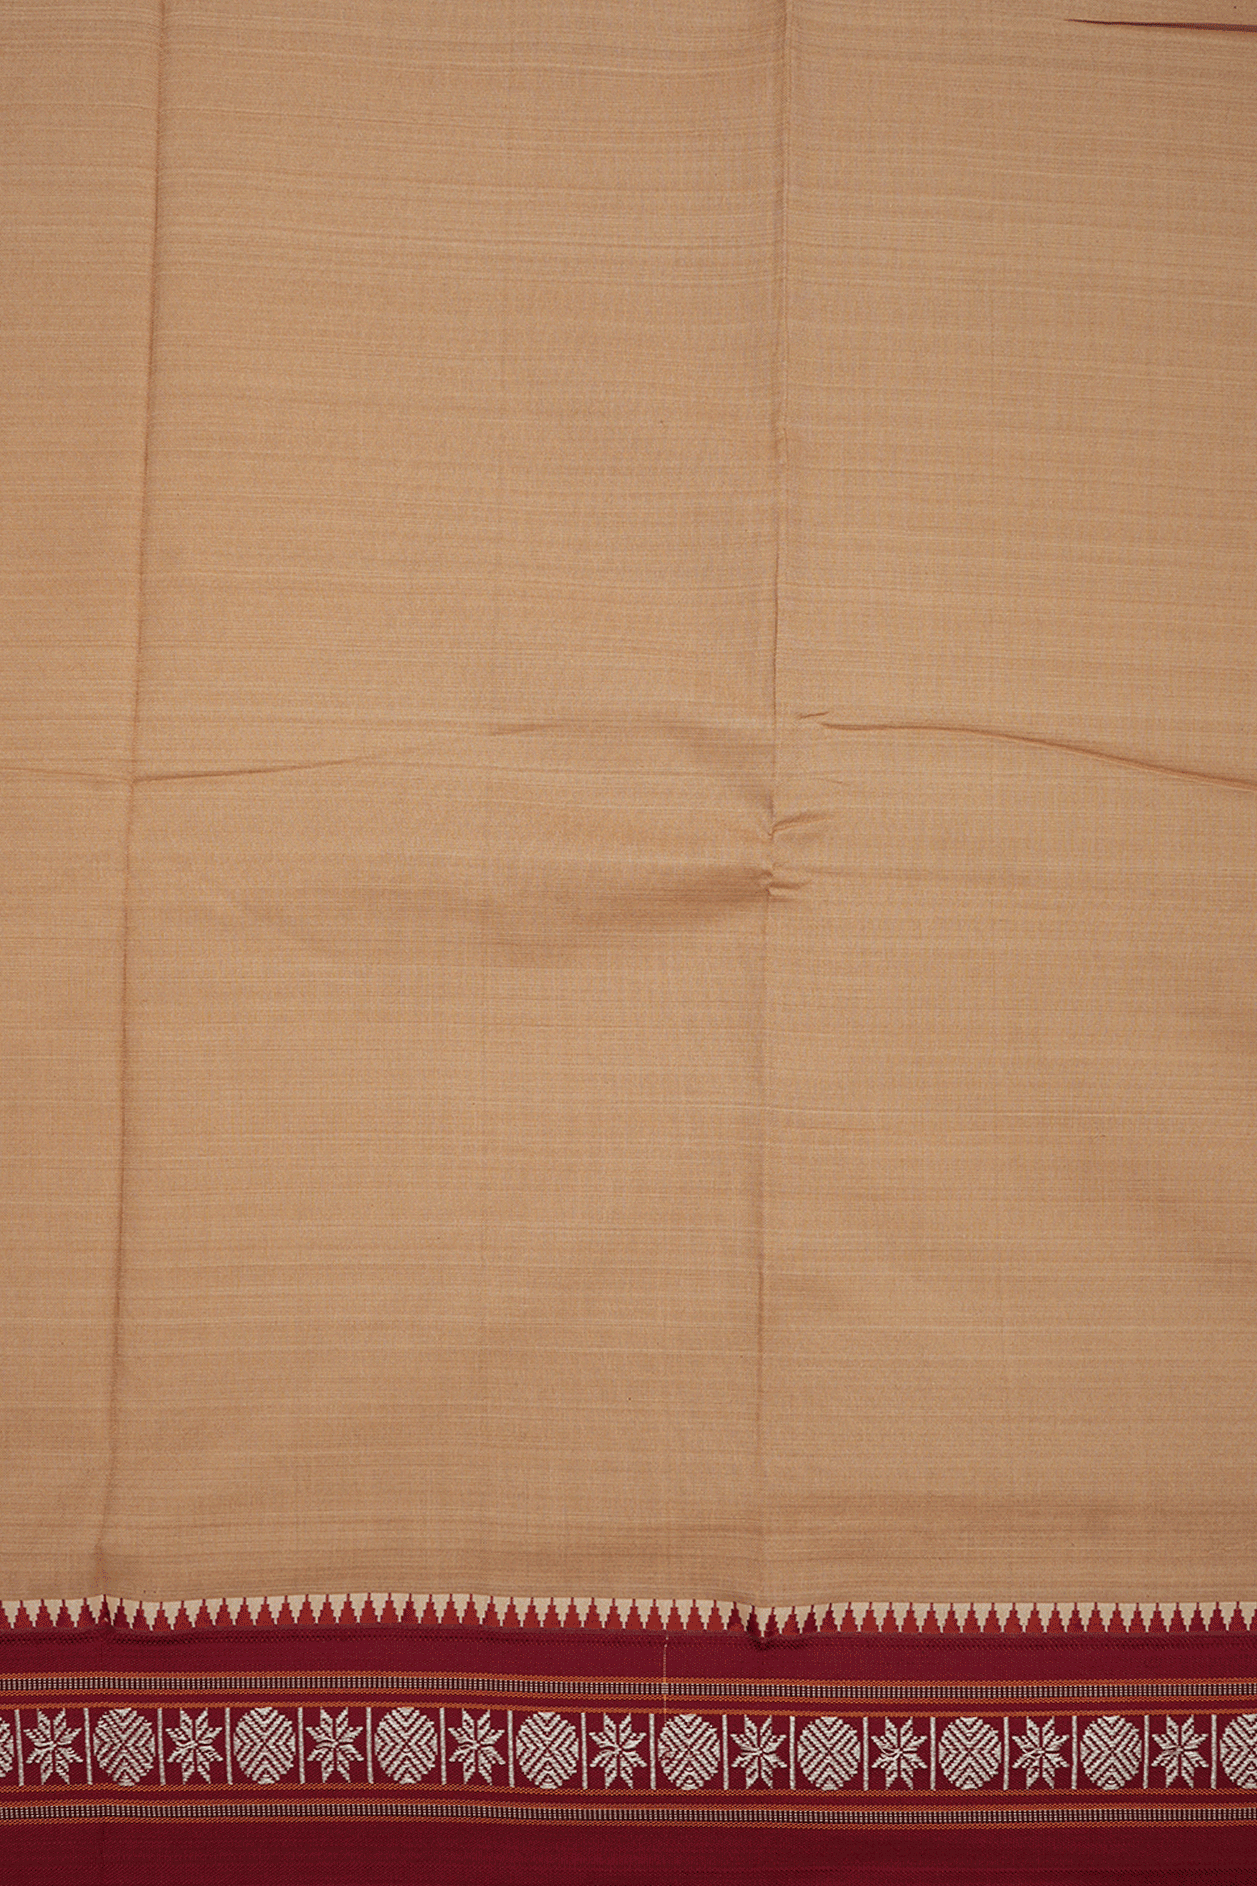 Threadwork Border Plain Biscuit Color Dharwad Cotton Saree